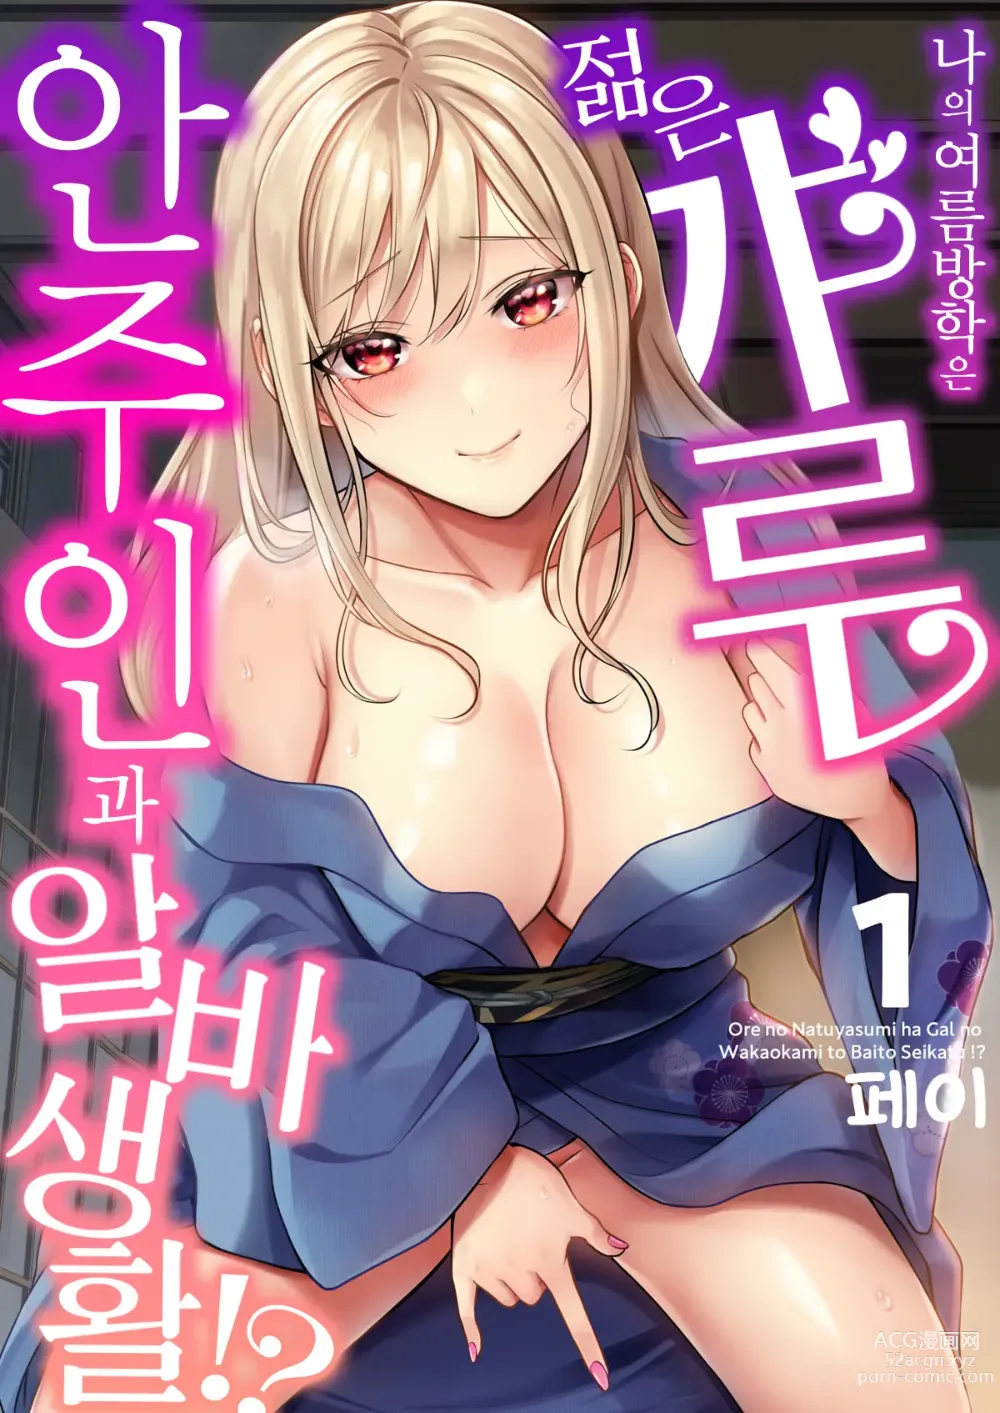 Page 1 of manga 내 여름방학은 젊은 갸루 안주인과 알바 생활?! 1